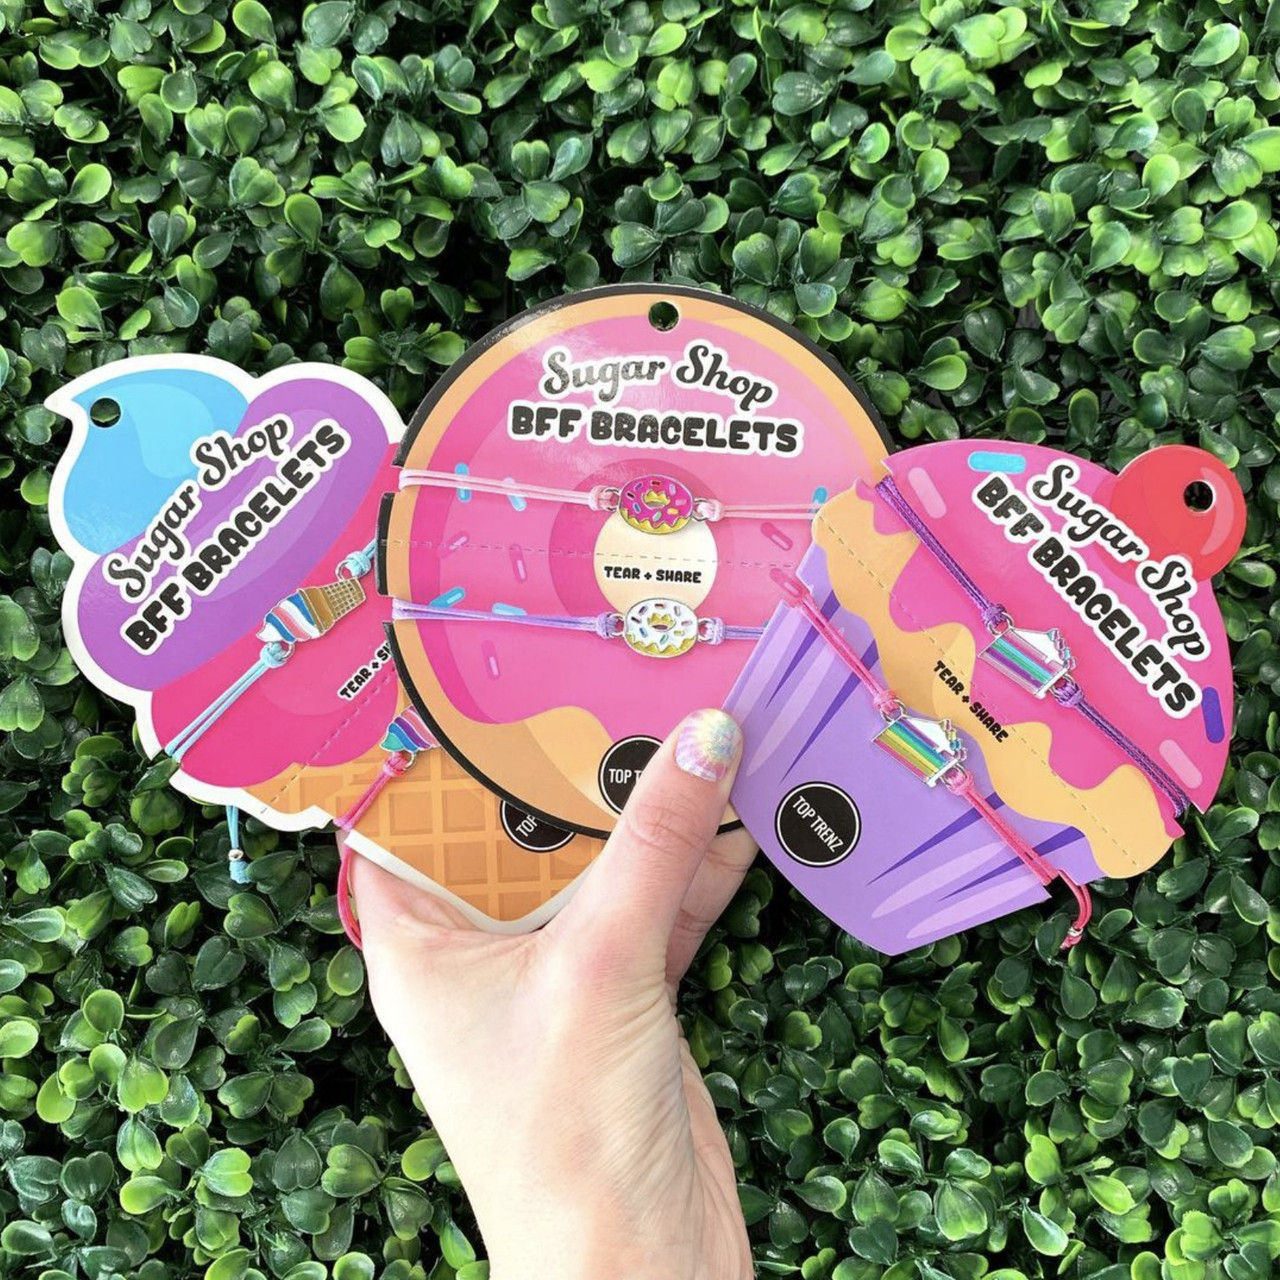 Sugar Shop BFF Bracelet - Ice Cream Cone Set